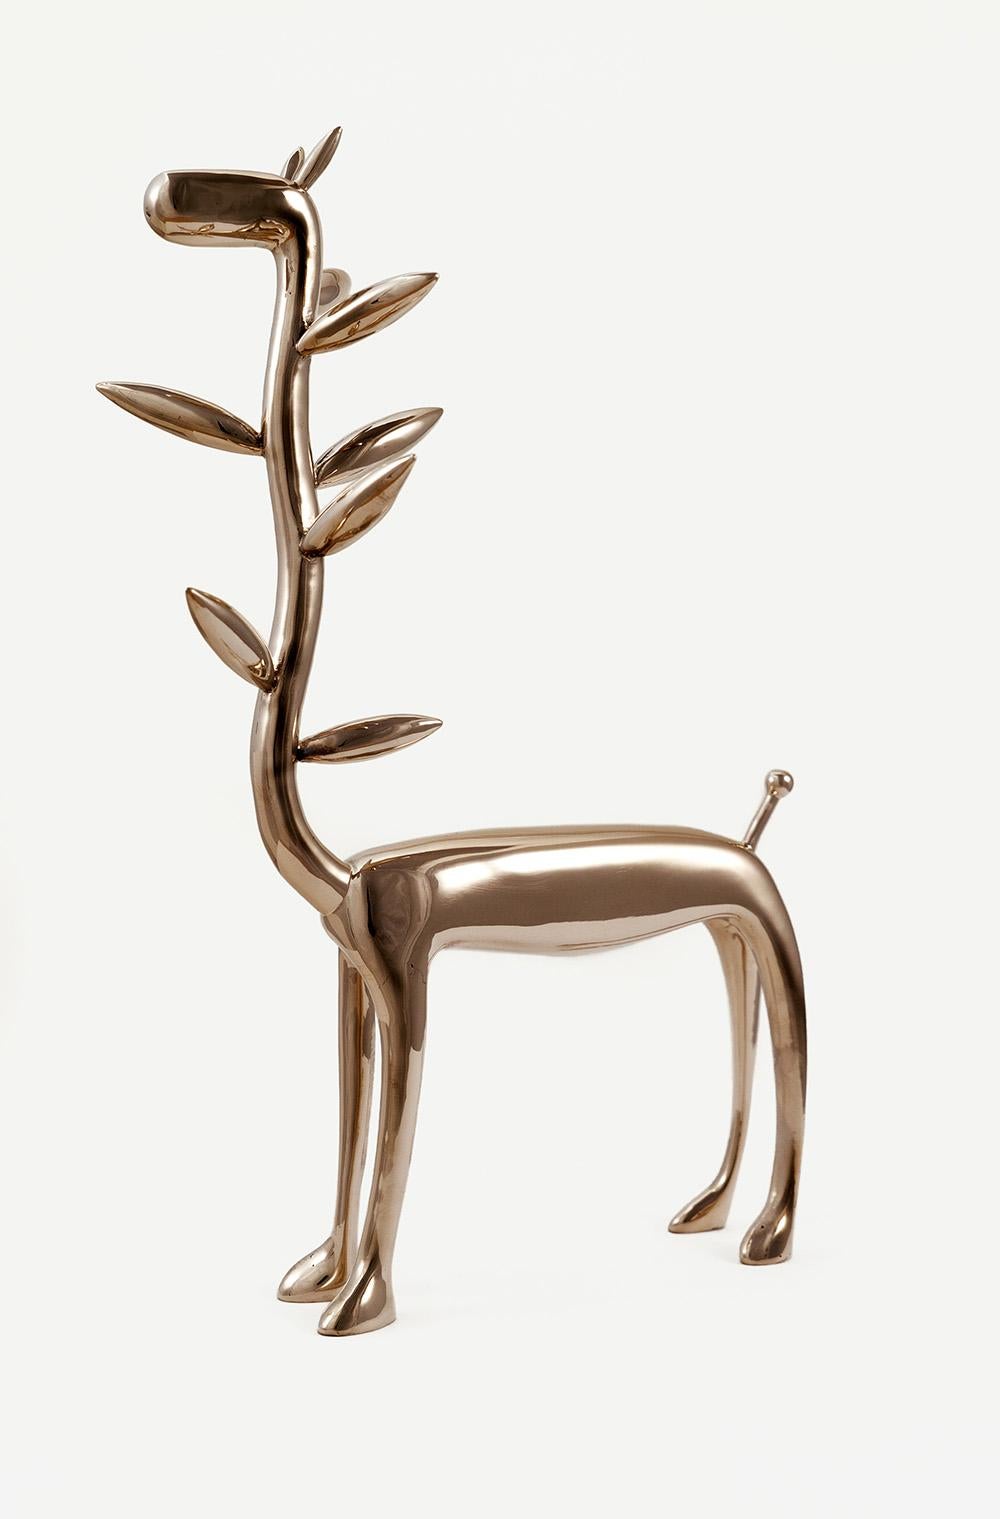 Plantiraffe by Marcelo M. Burgos - polished bronze sculpture, golden, giraffe - Sculpture by Marcelo Martin Burgos